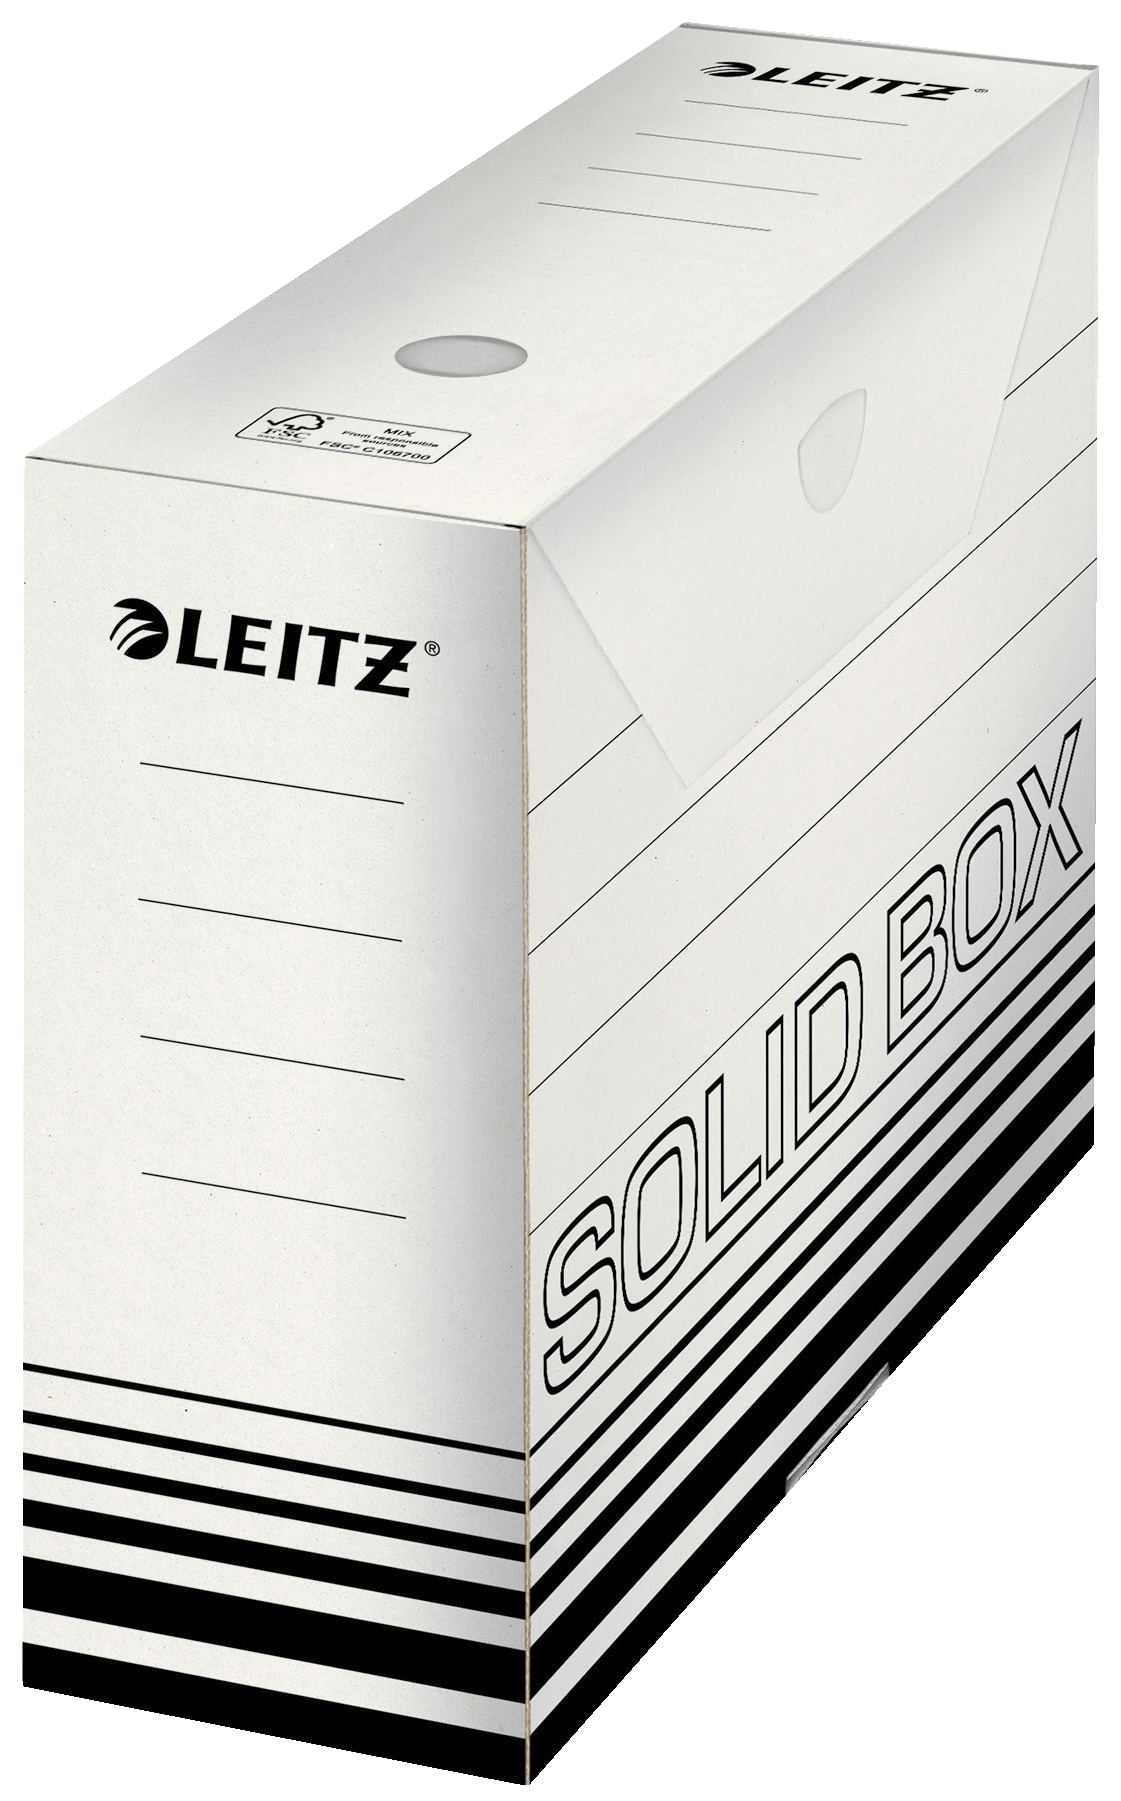 LEITZ Solid Box A4 6128-00-01 blanc 100x257x330mm